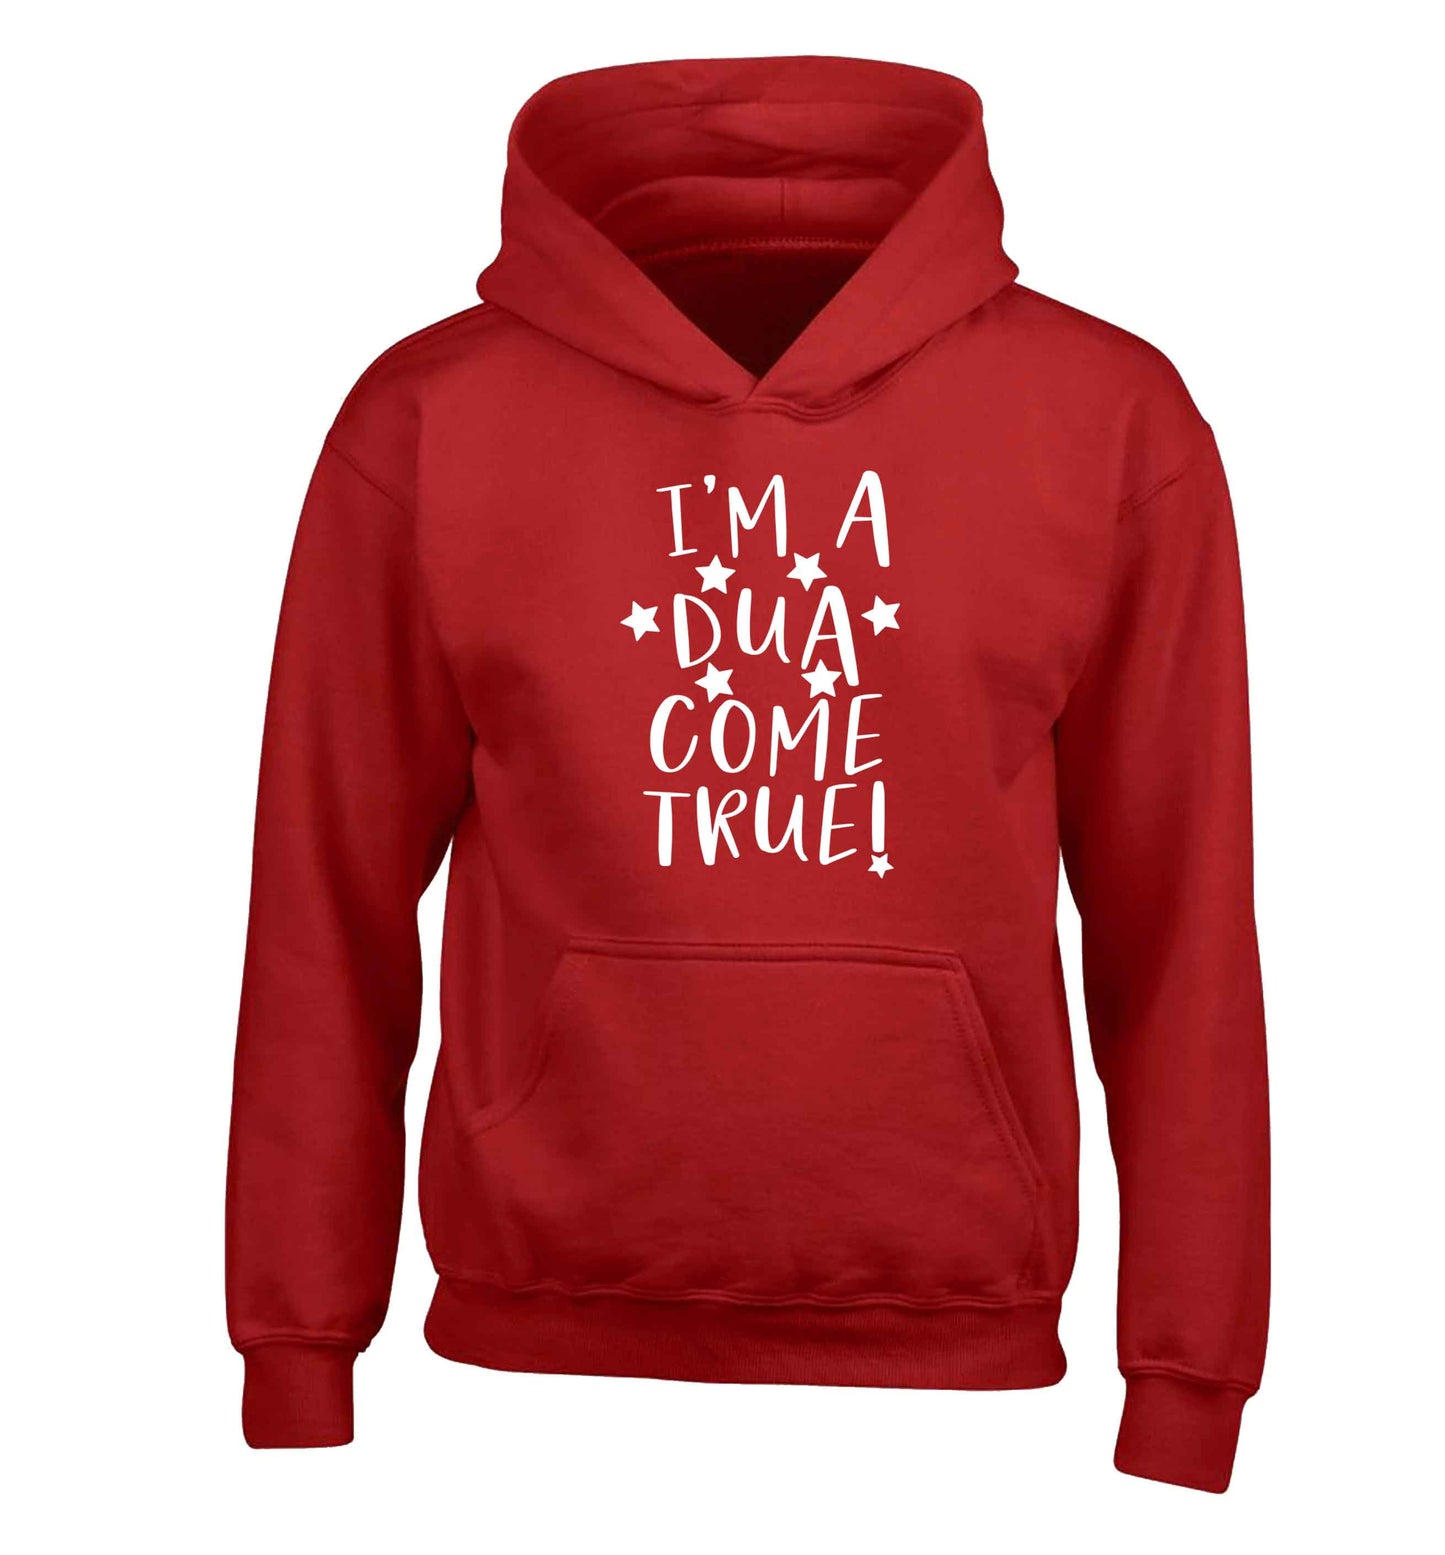 I'm a dua come true children's red hoodie 12-13 Years